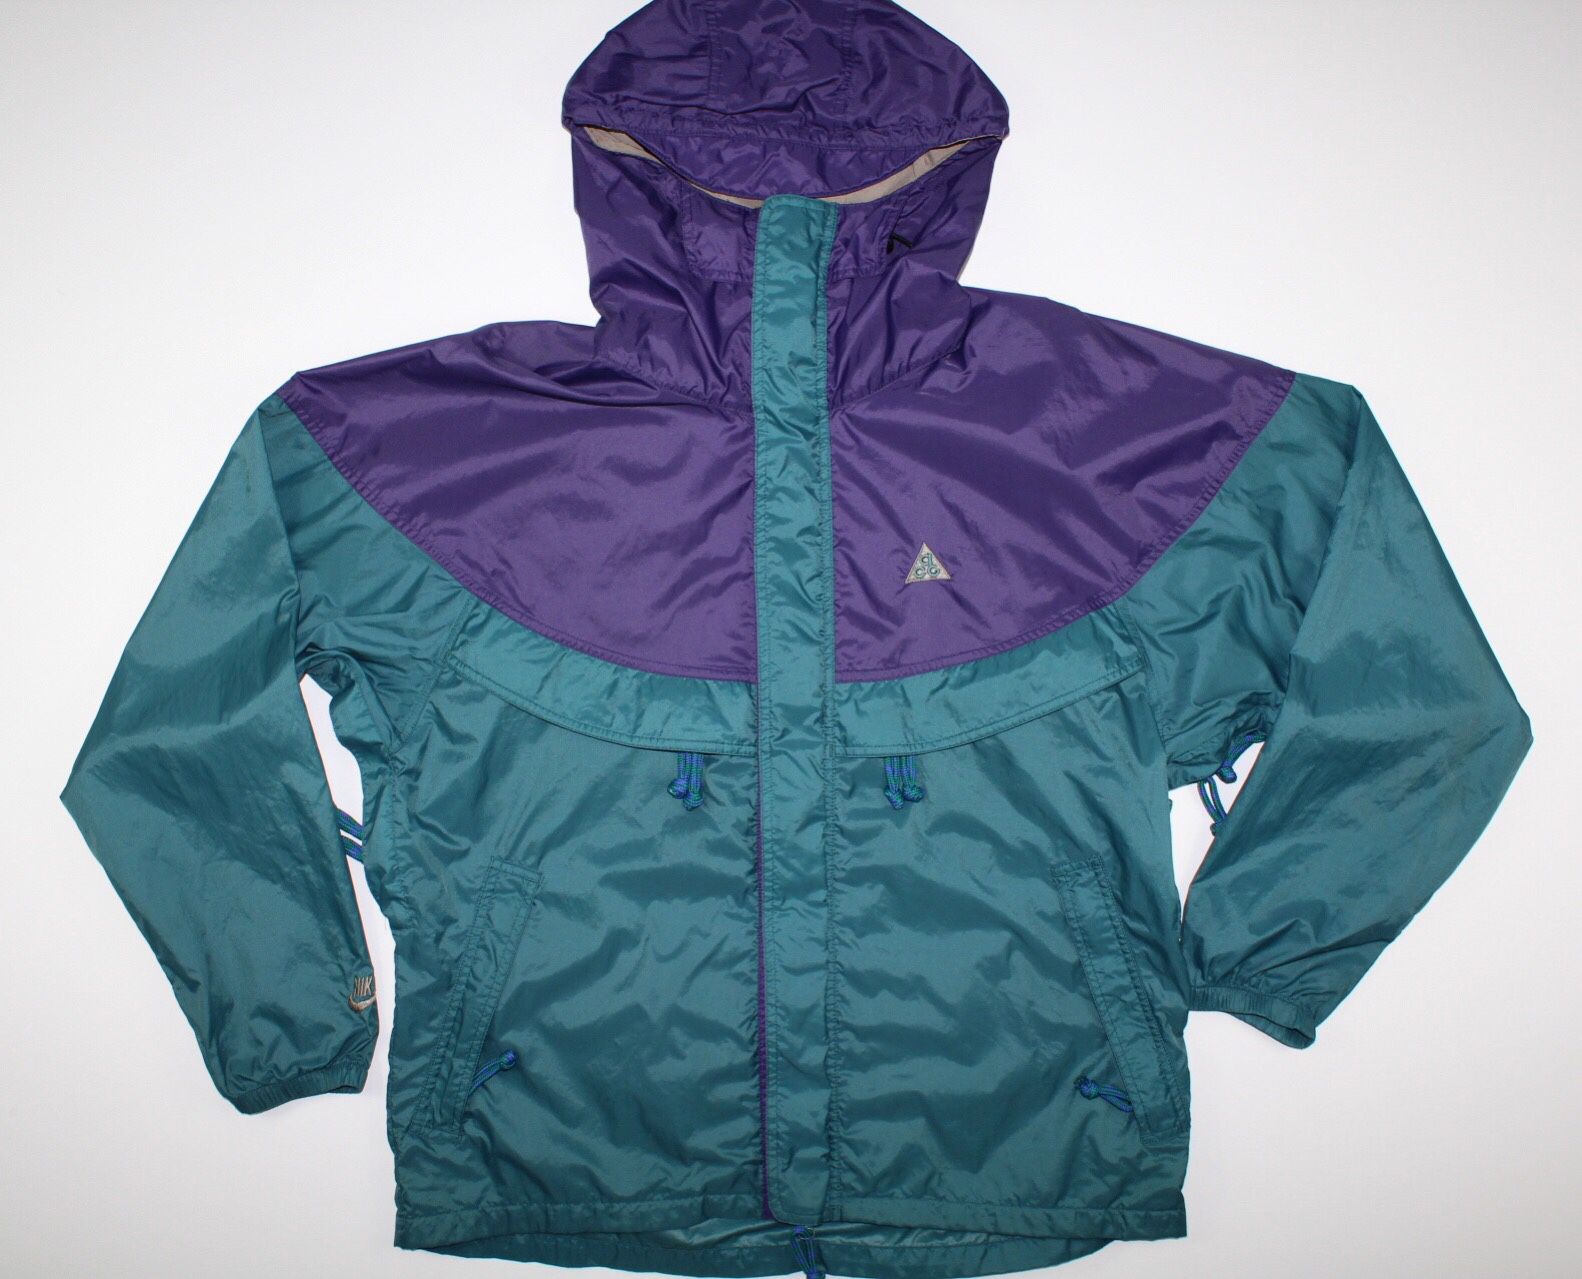 Vintage 90s Nike ACG Hooded Zip Up Windbreaker Jacket Medium All conditions outdoors